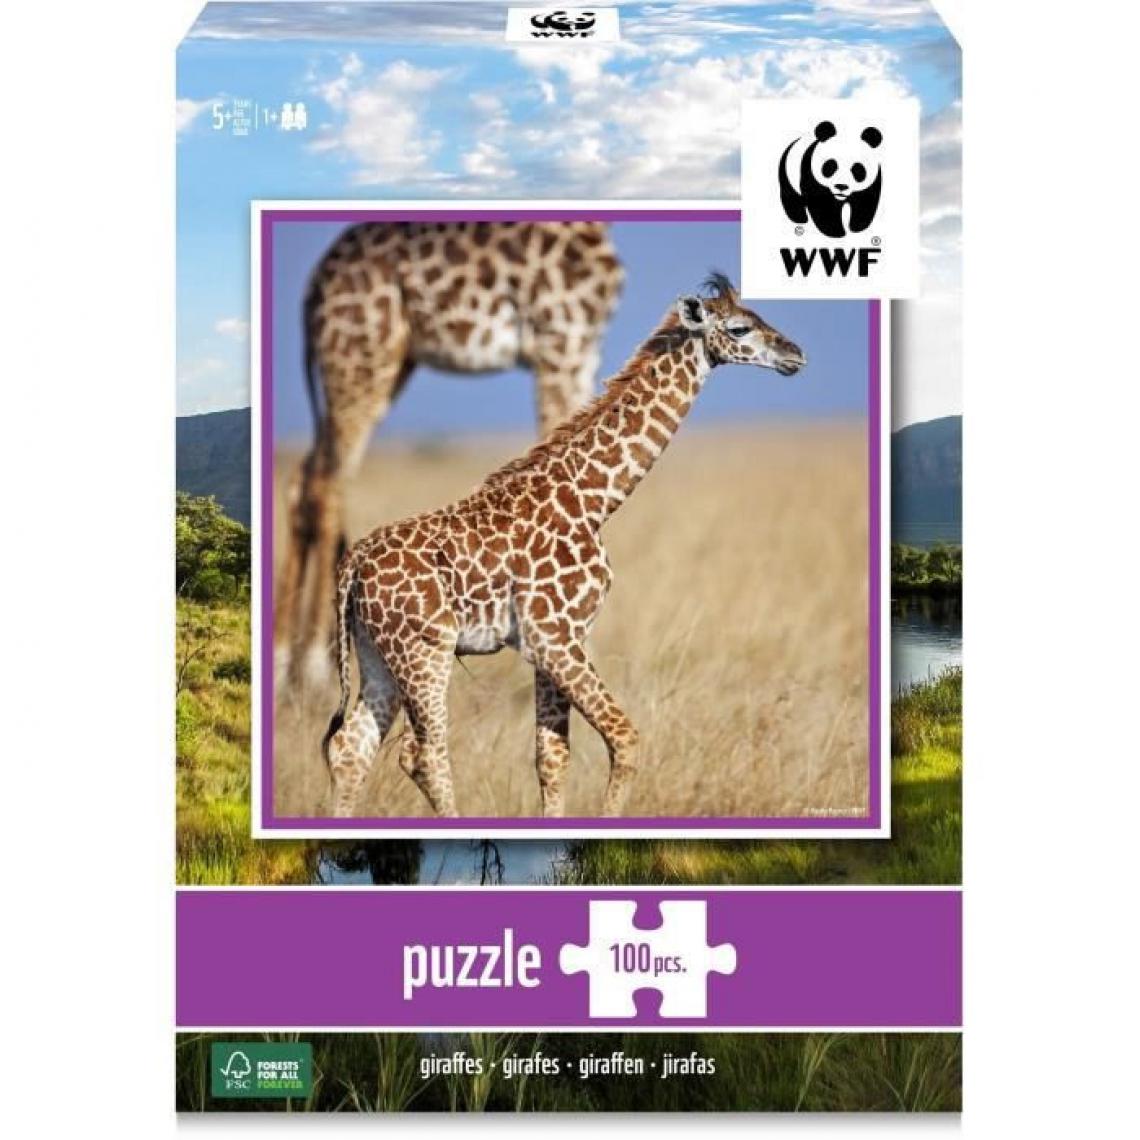 Cstore - WWF Puzzle 100 pièces Girafes - Animaux